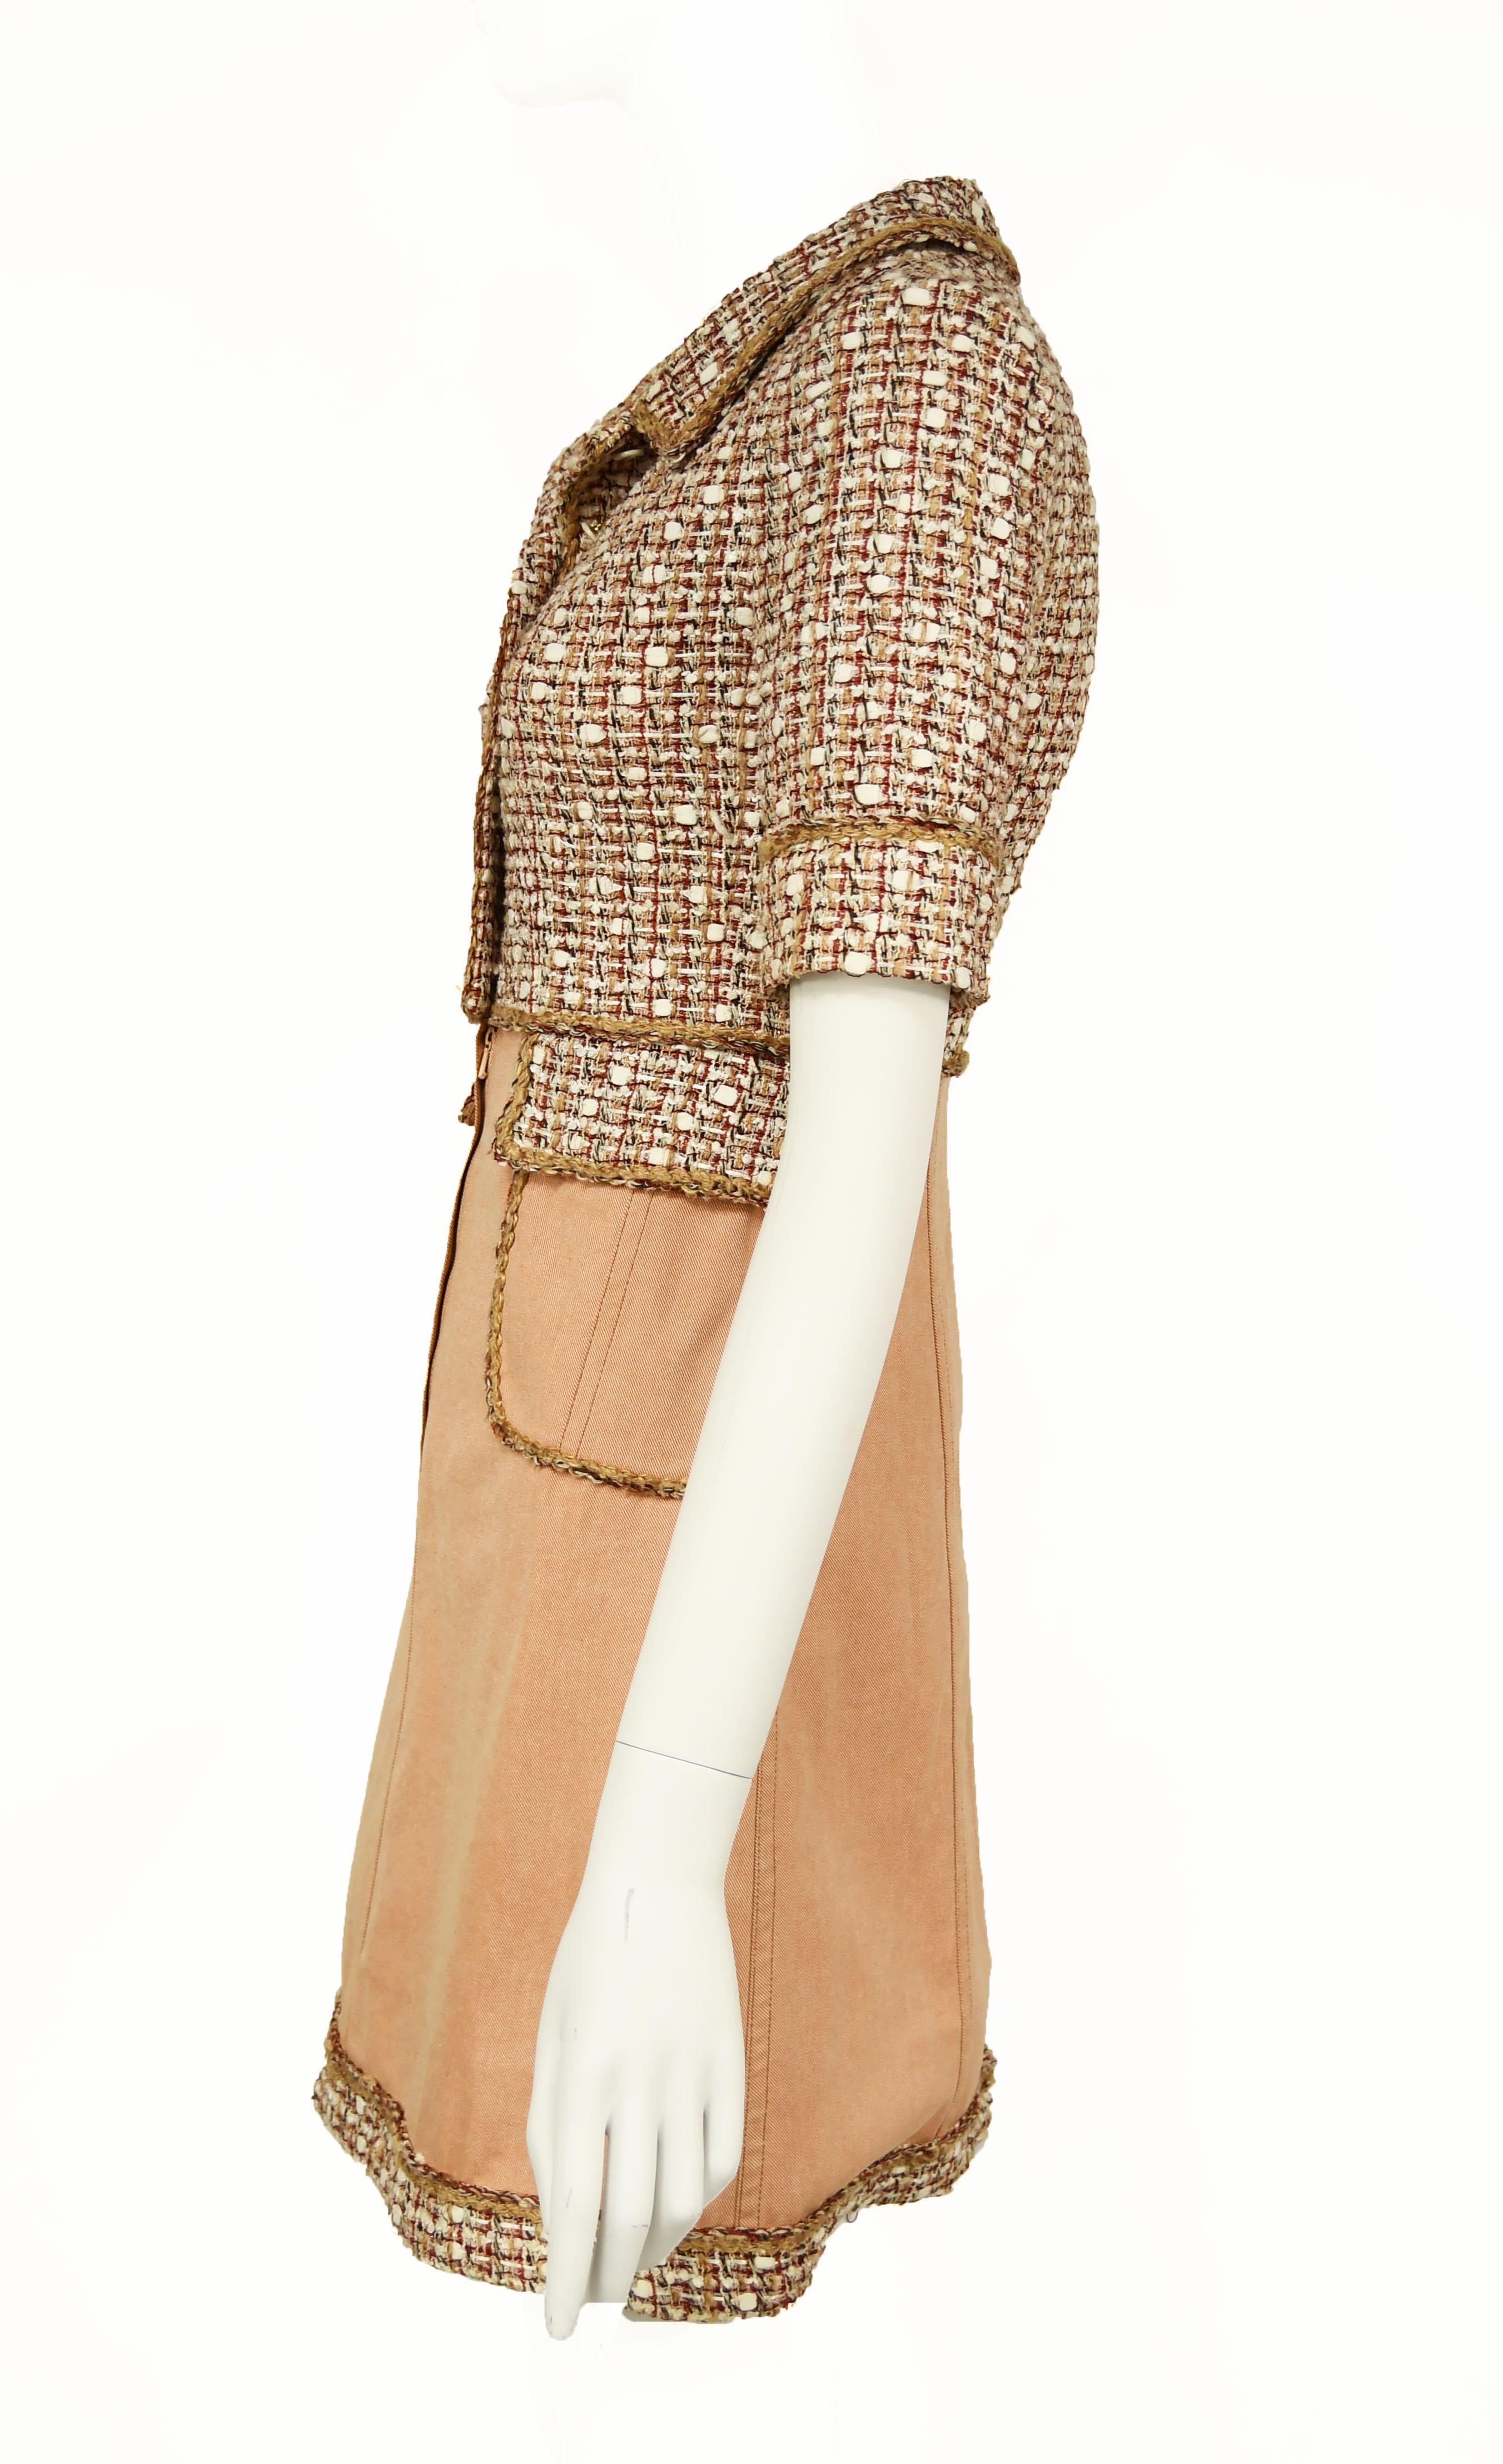 Chanel Tweed & Twill A-Line Dress - Size FR 34 (Beige)